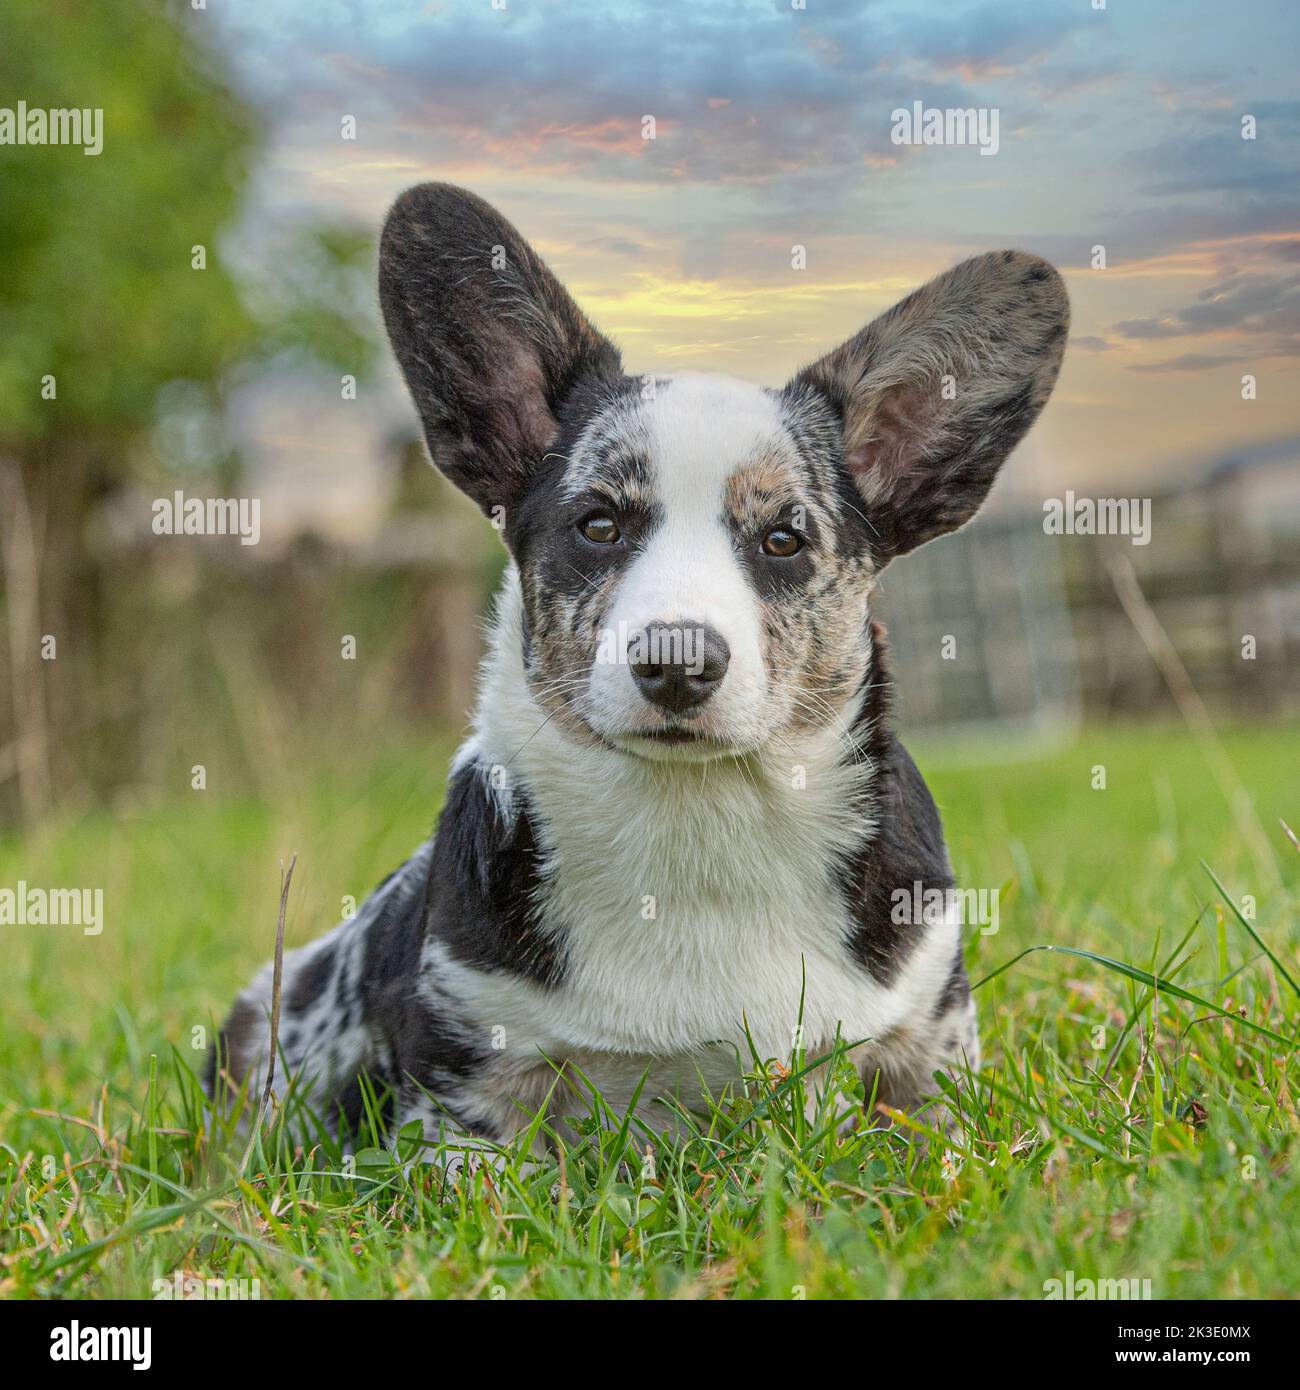 Cardigan corgi puppy Stock Photo